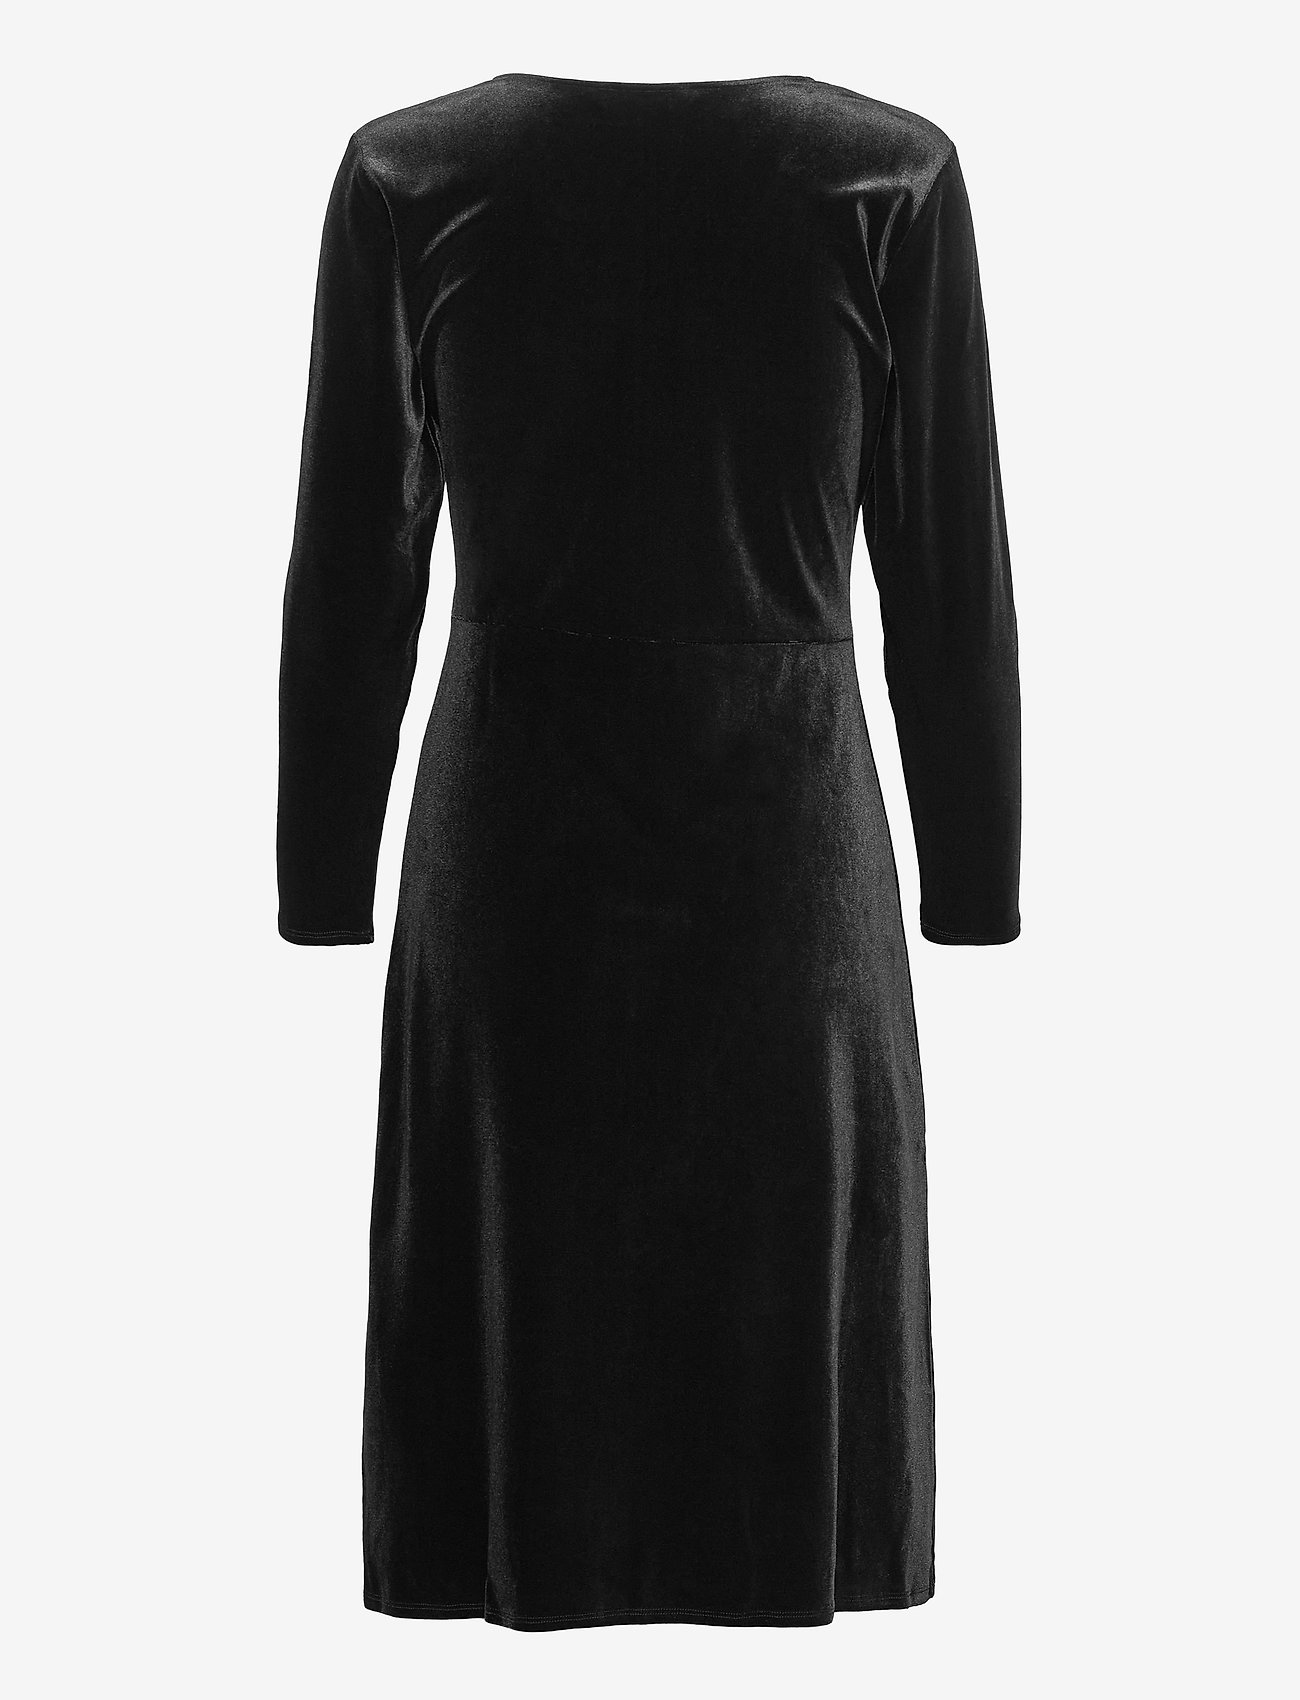 Part Two - FloraPW DR - midi kjoler - black - 1